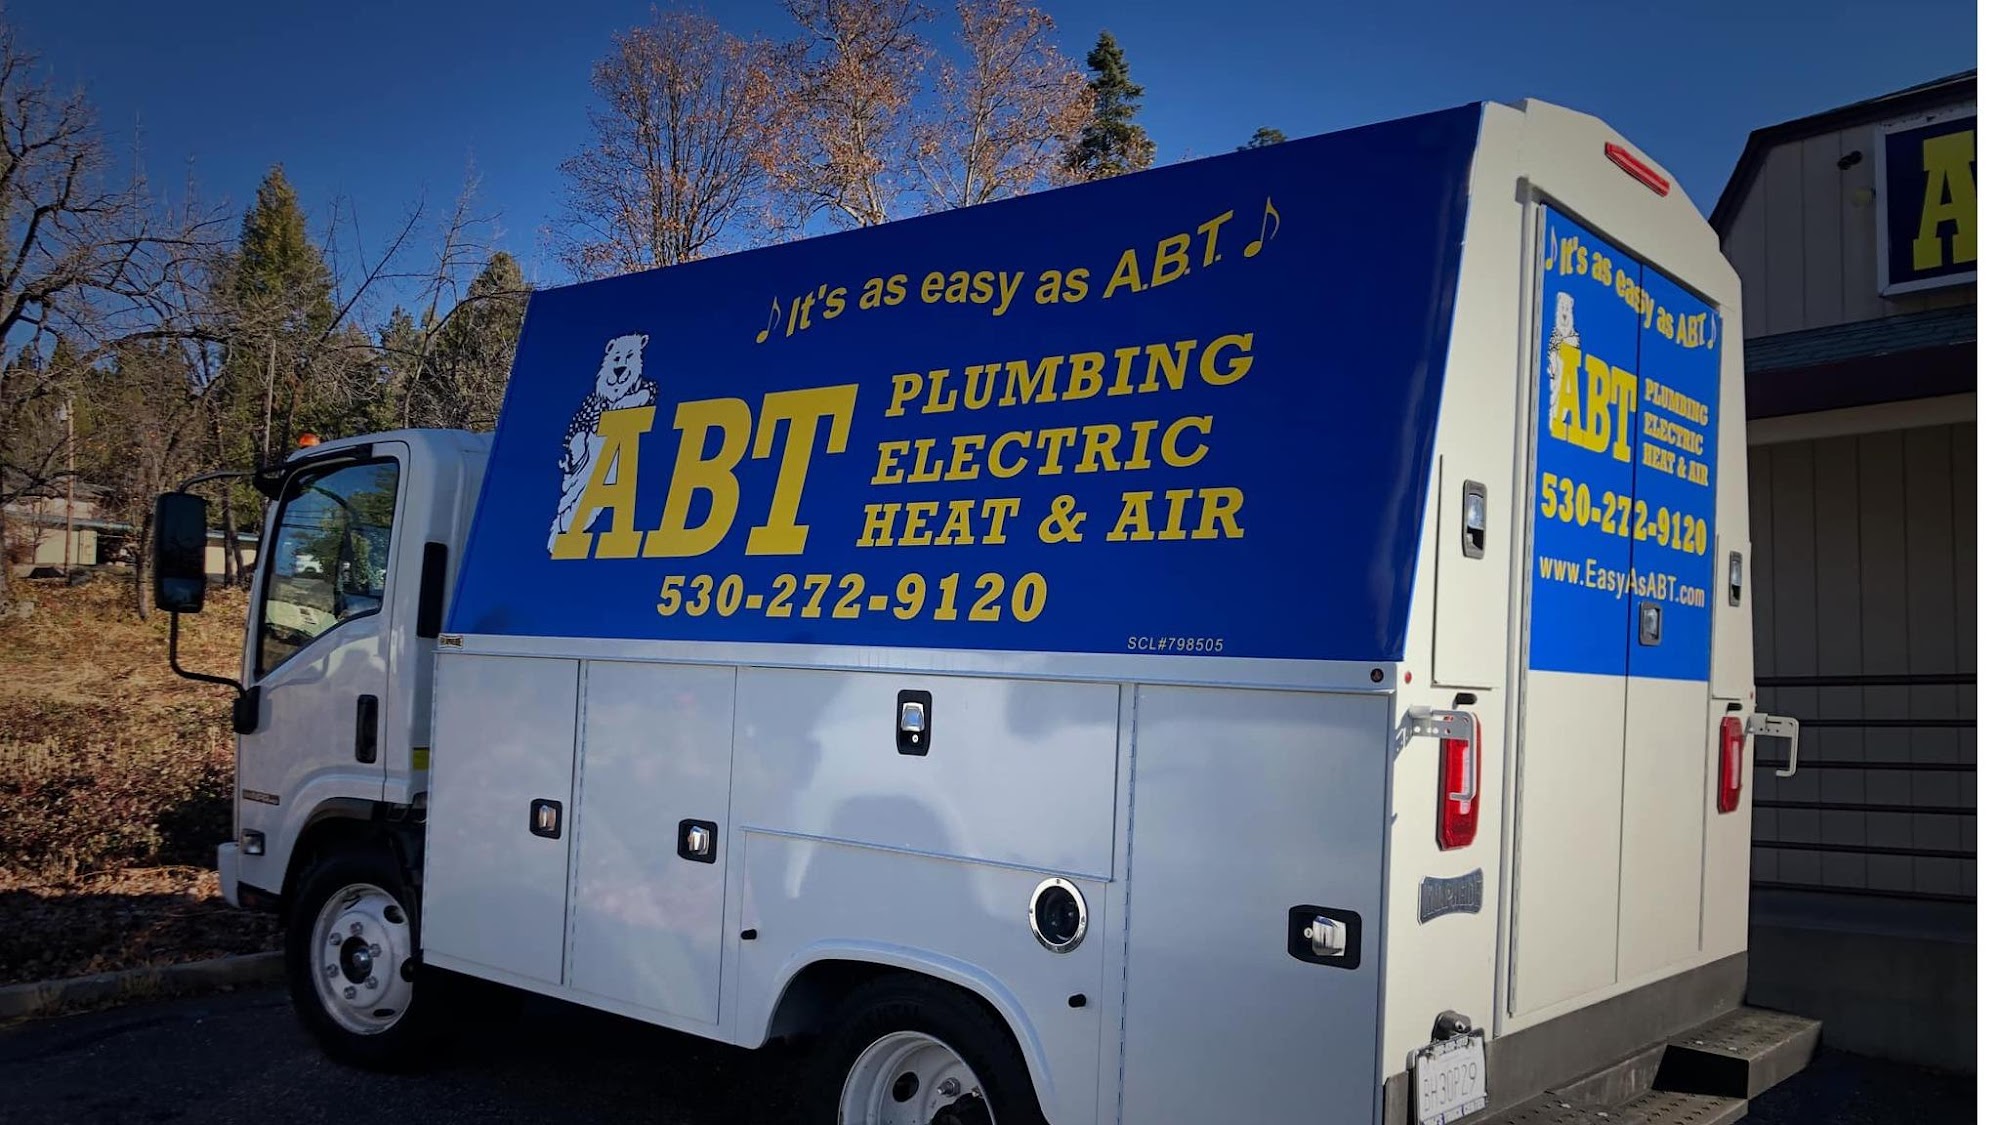 ABT Plumbing, Electric, Heat & Air